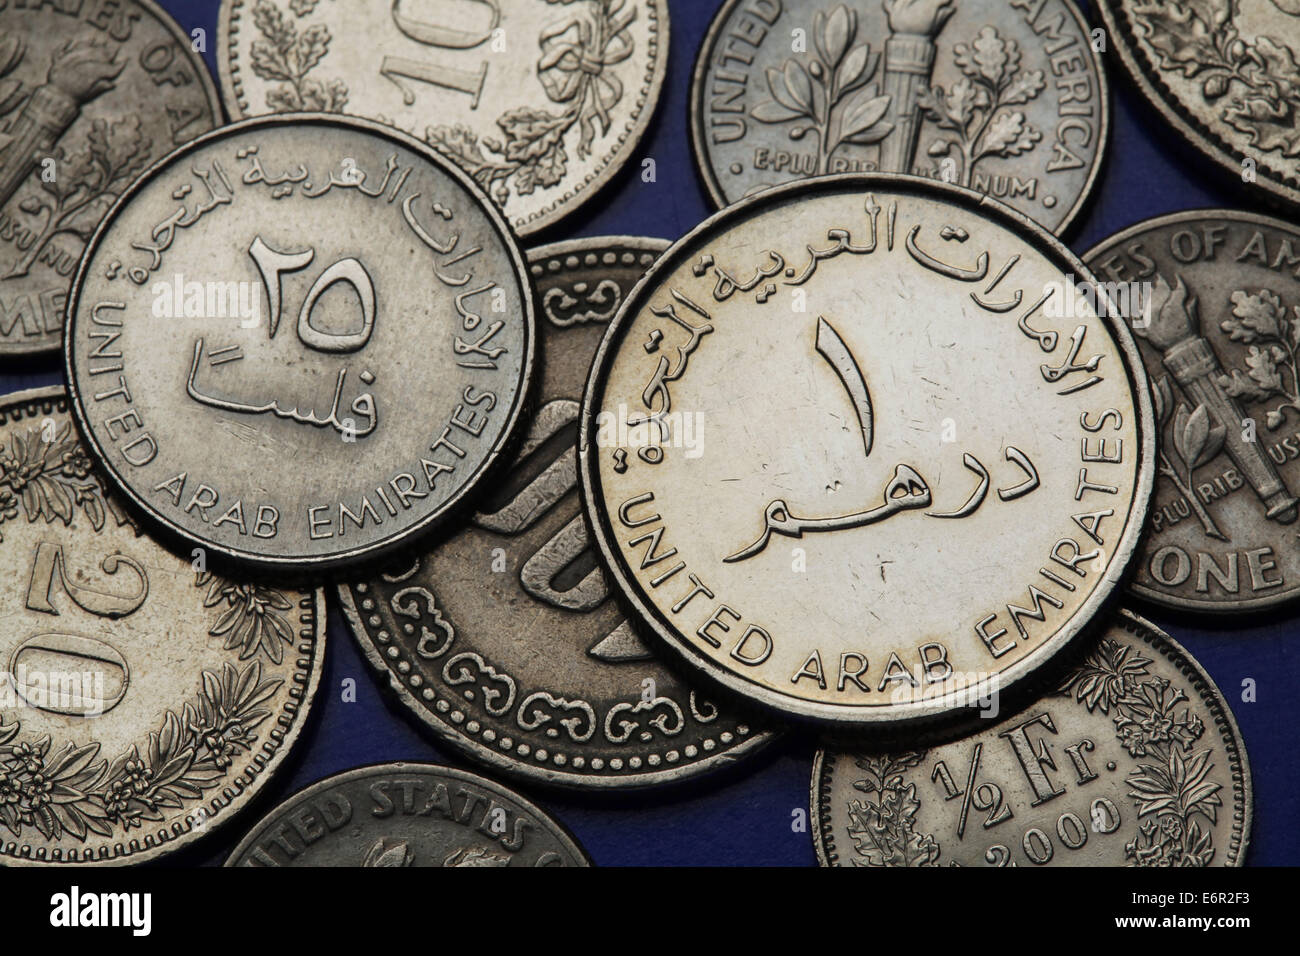 Coins of the United Arab Emirates. UAE one dirham and twenty five fils coins. Stock Photo